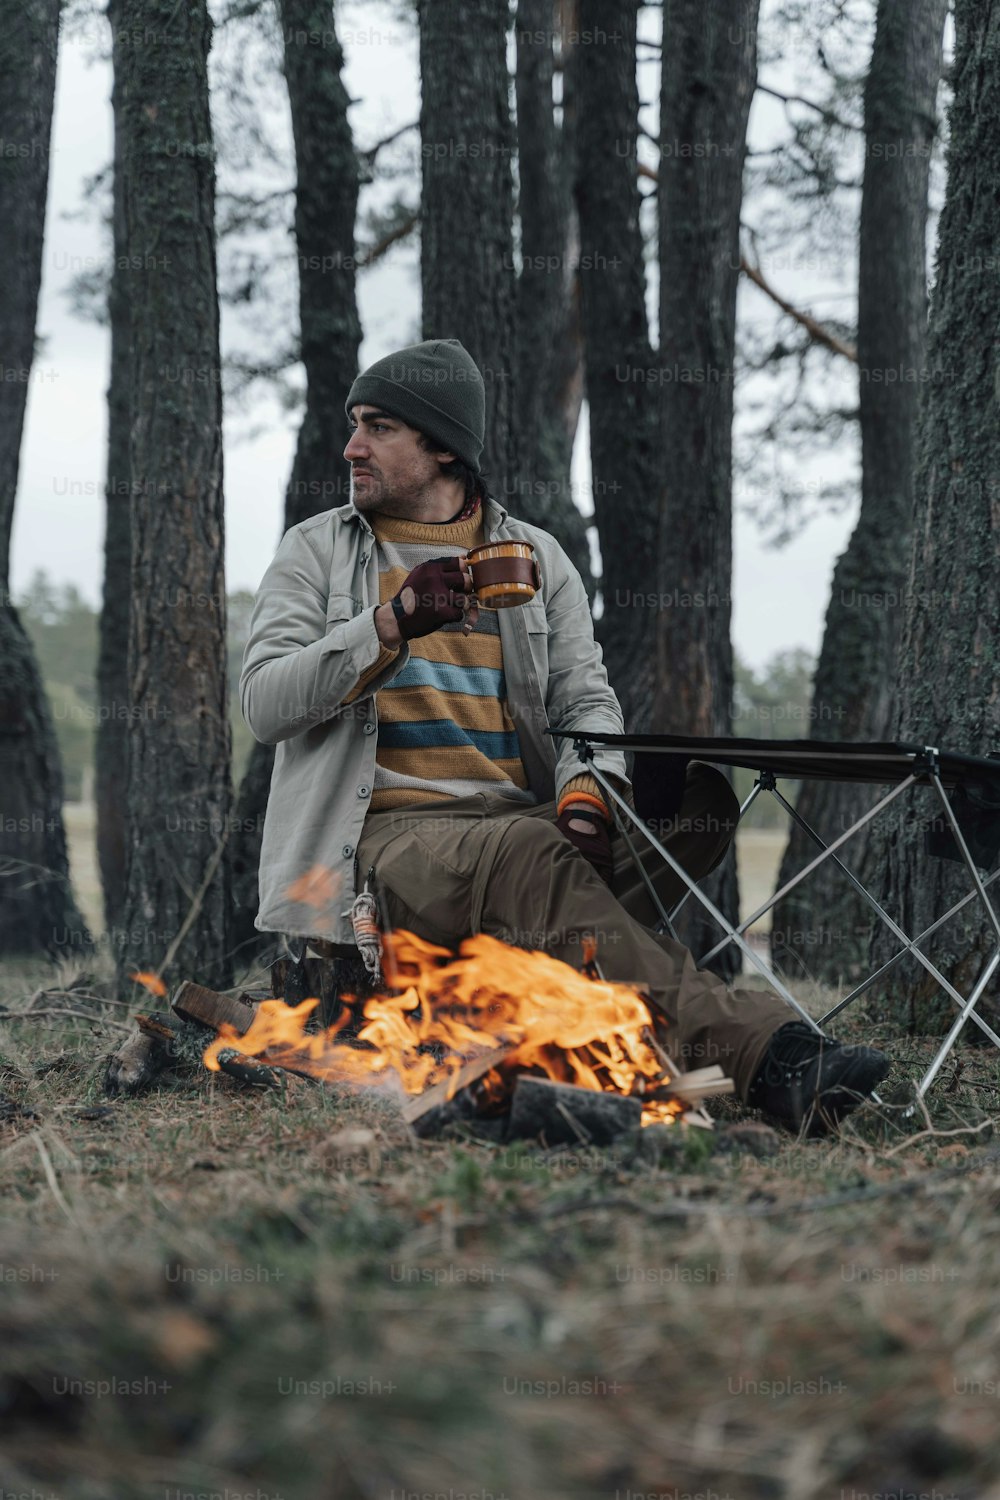 Un uomo seduto accanto a un fuoco in una foresta